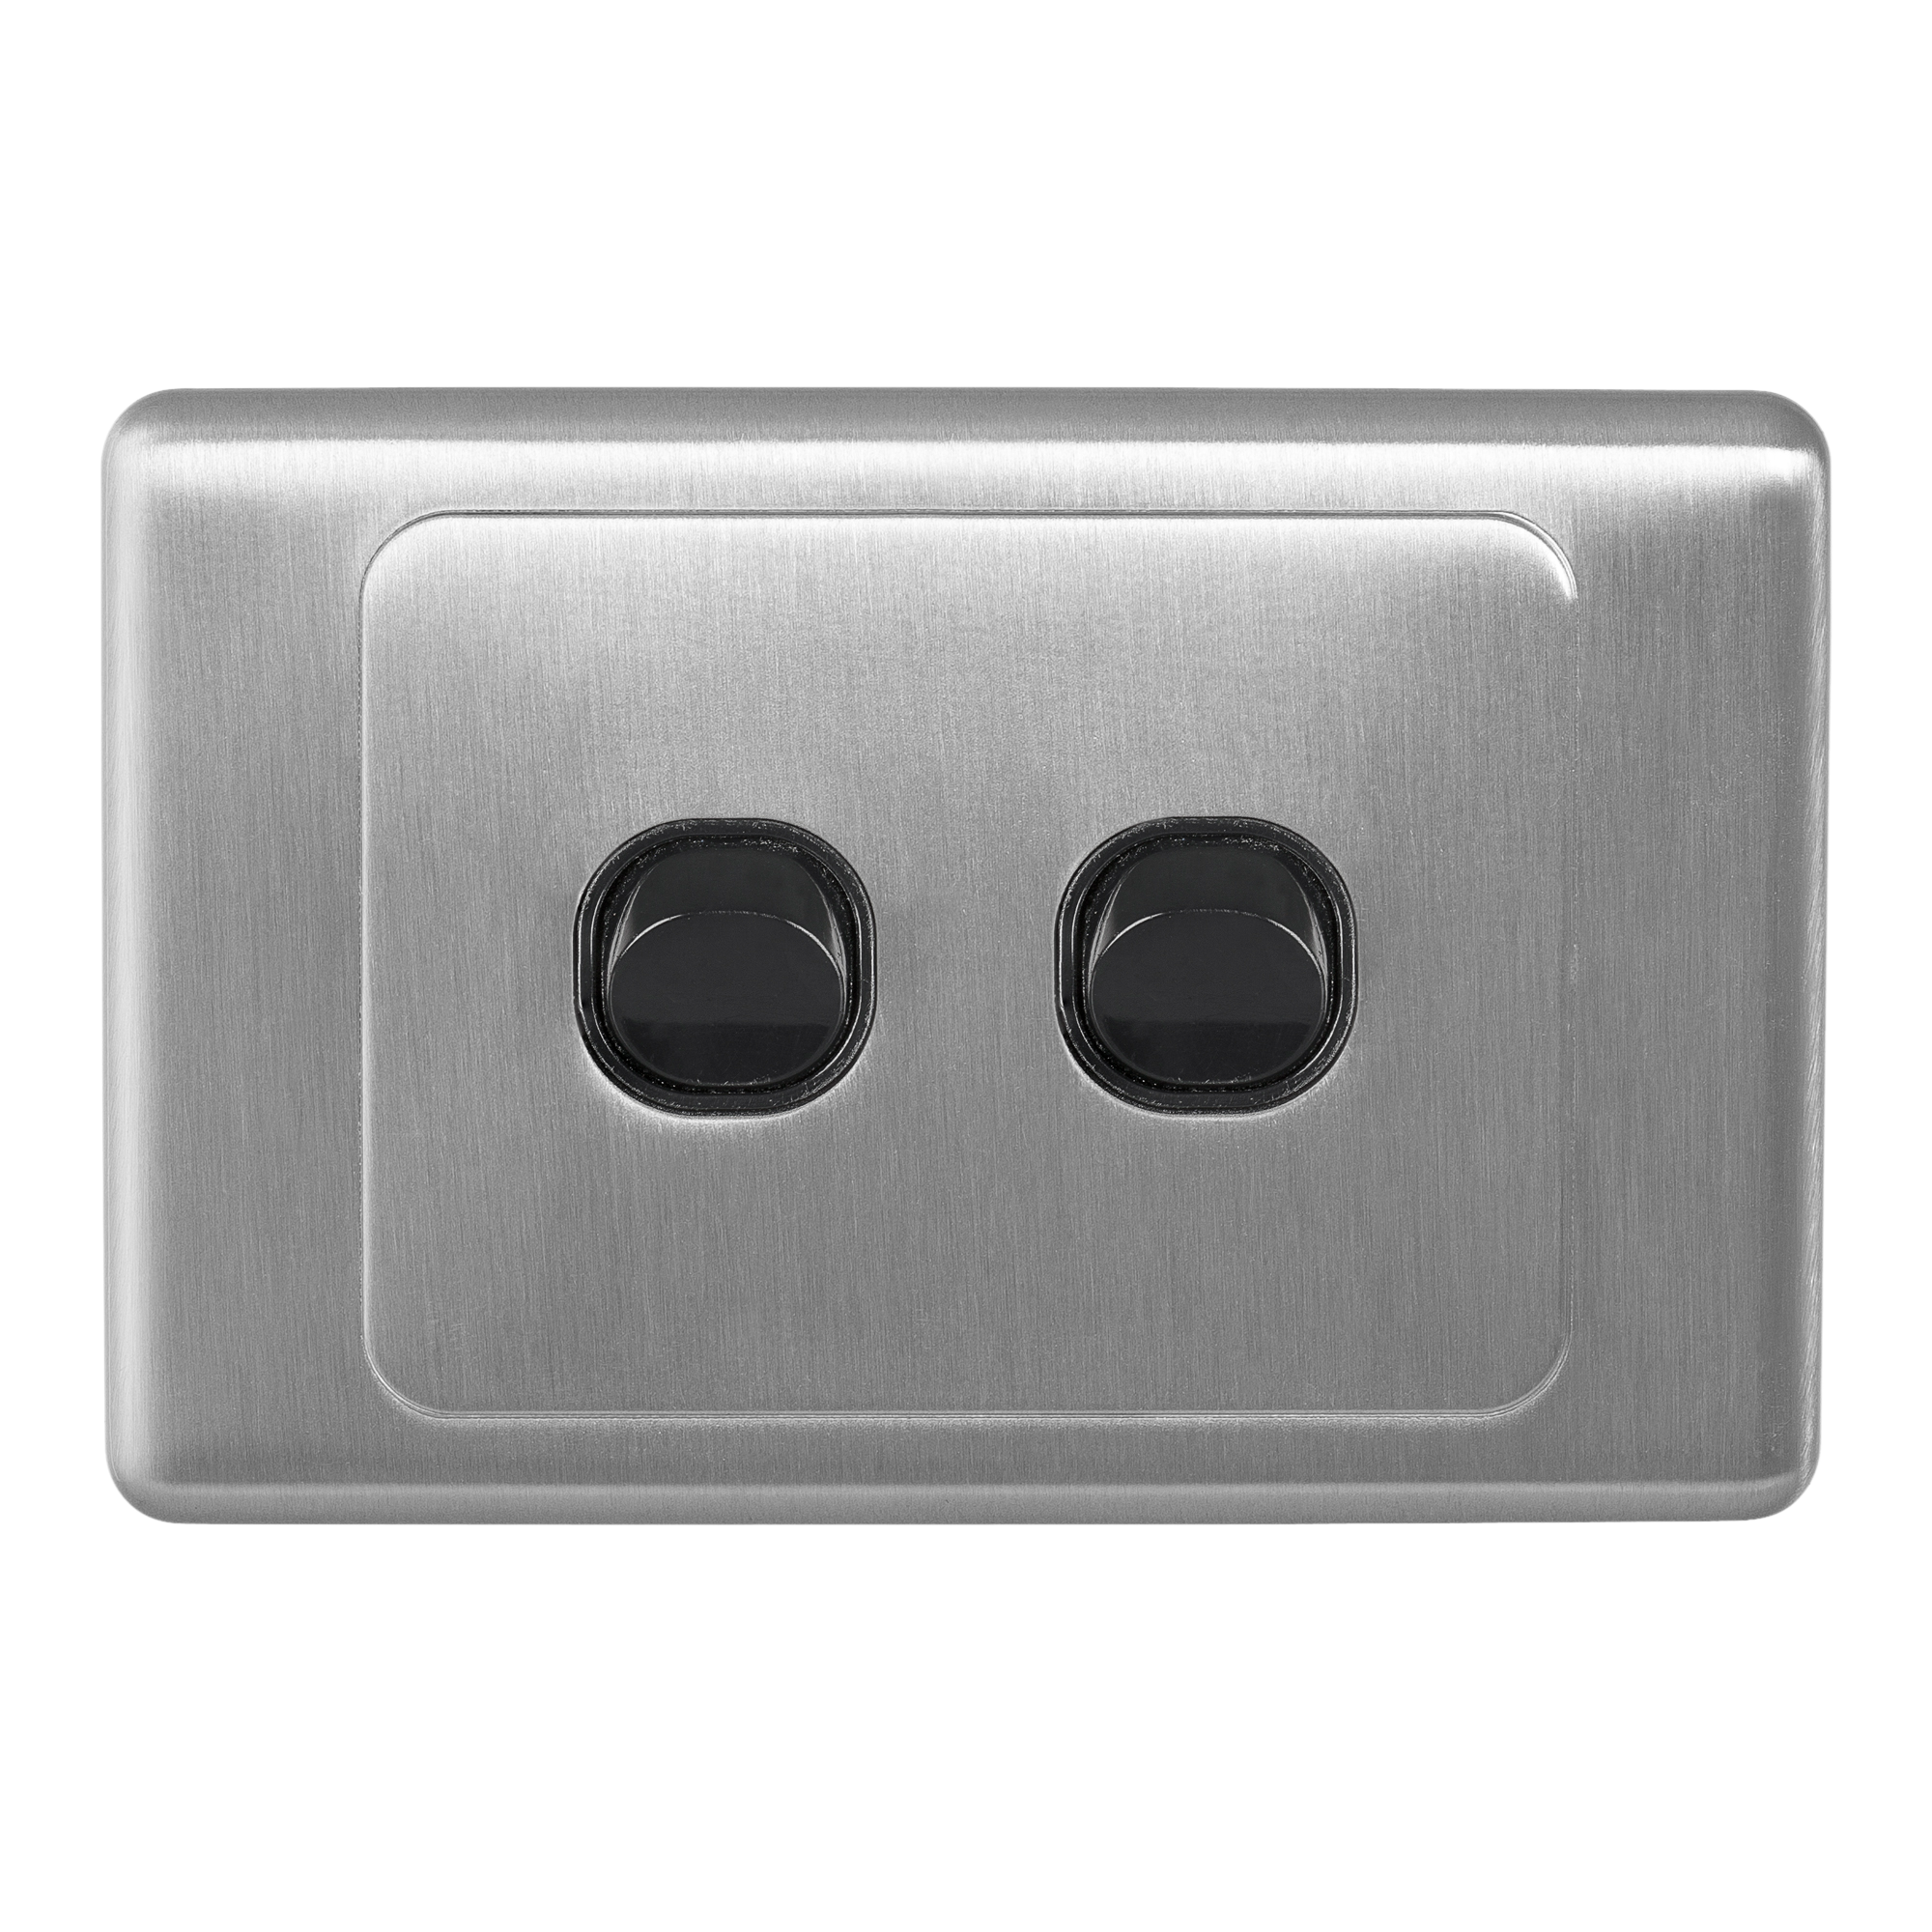  S-line s/steel double switch 